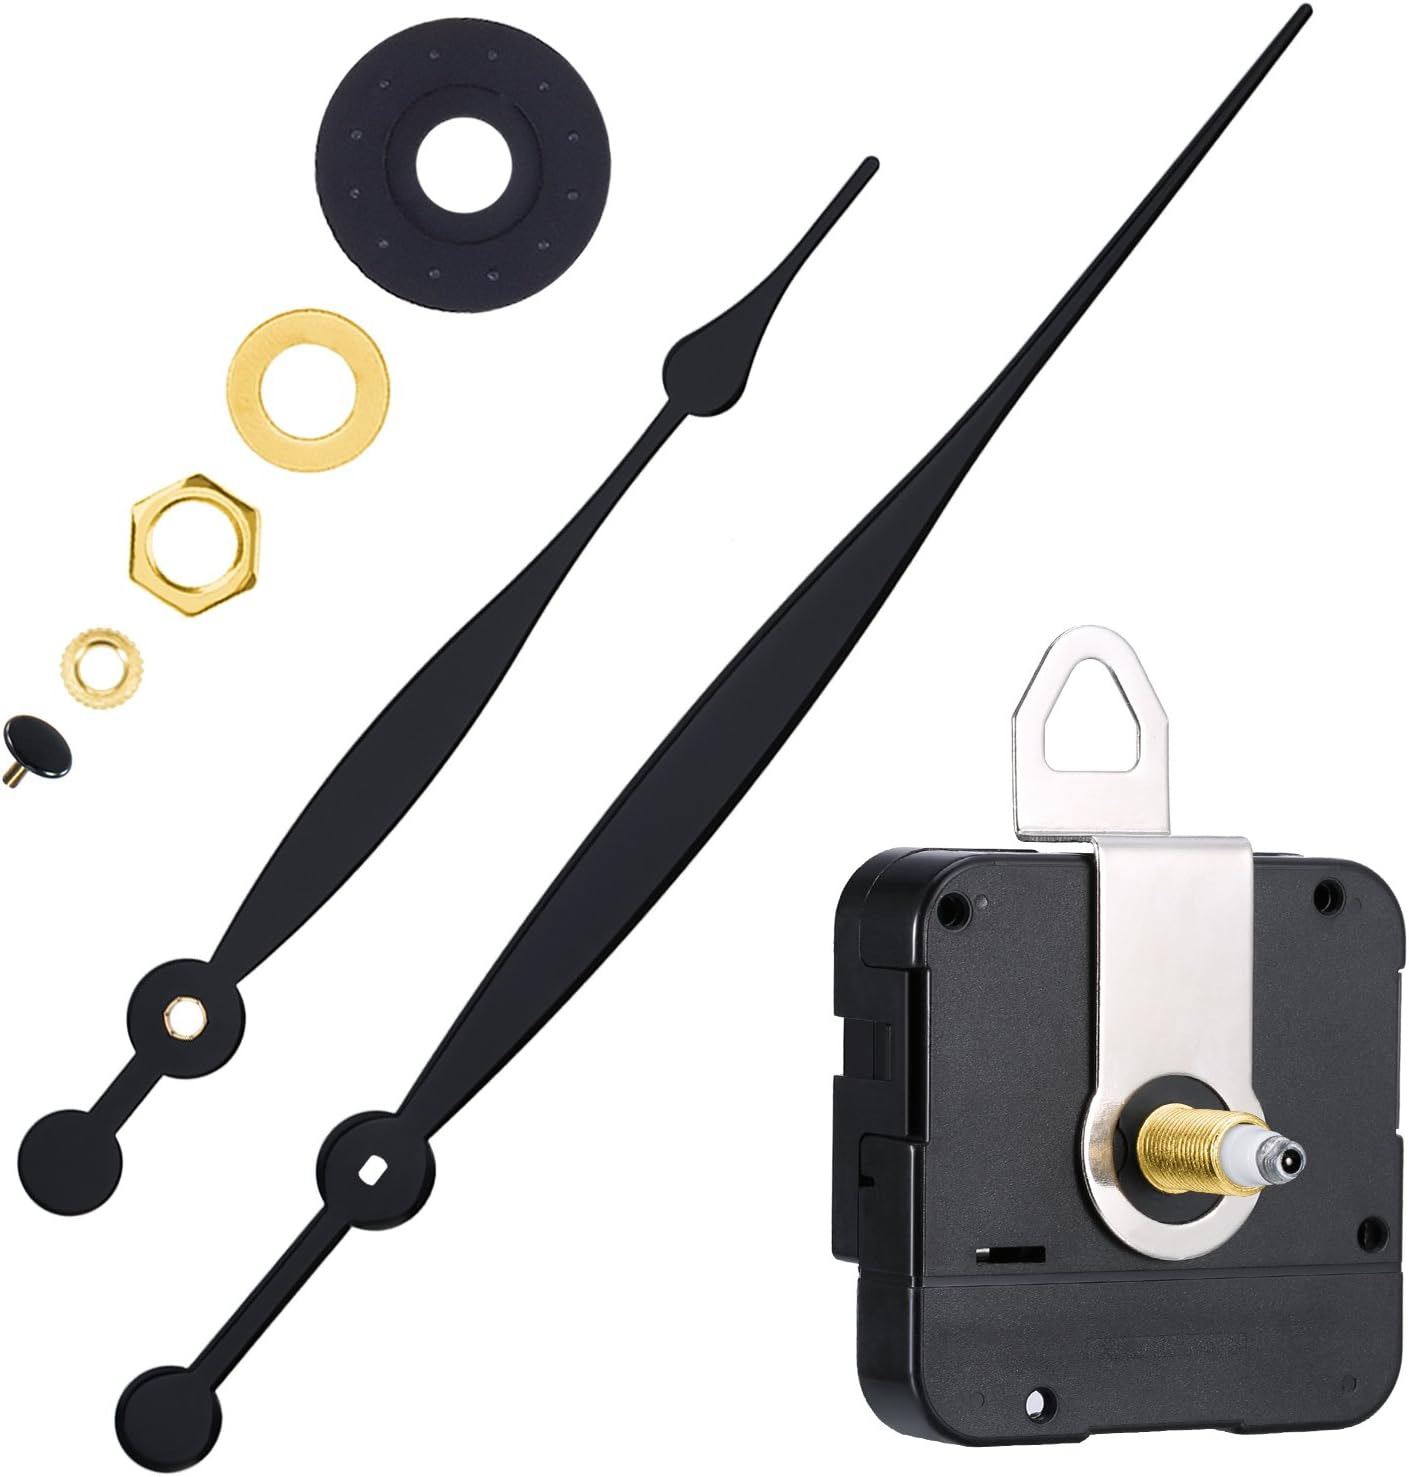 Hicarer High Torque Quartz Clock Movement Replacement Parts with 208 mm/ 8.2